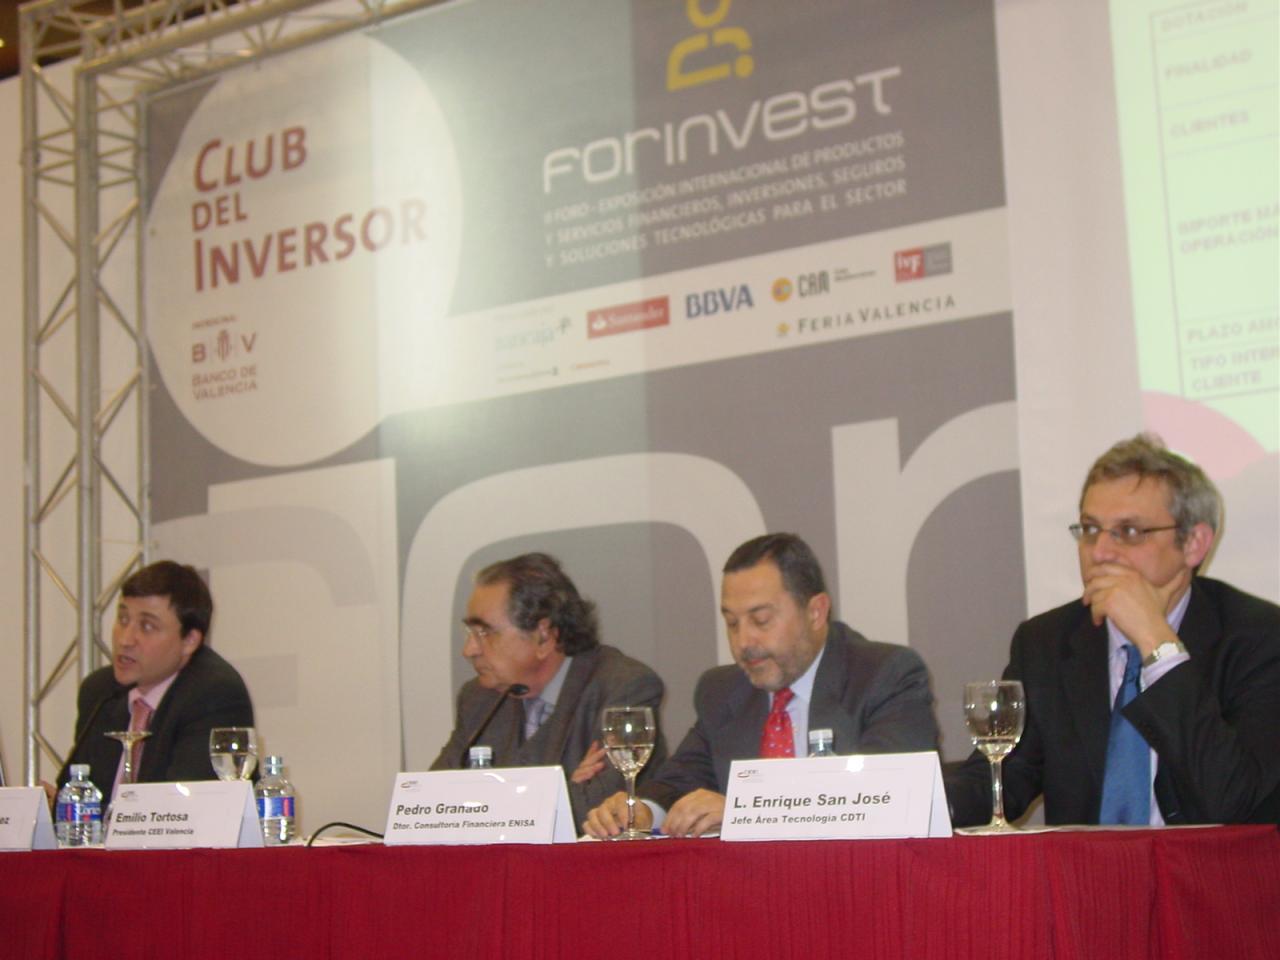 Fco. Javier Gmez (ICO), Emilio Tortosa (Presidente de CEEI Valencia), Pedro Granado (ENISA) y Lus Enrique San Jos (CDTI)
